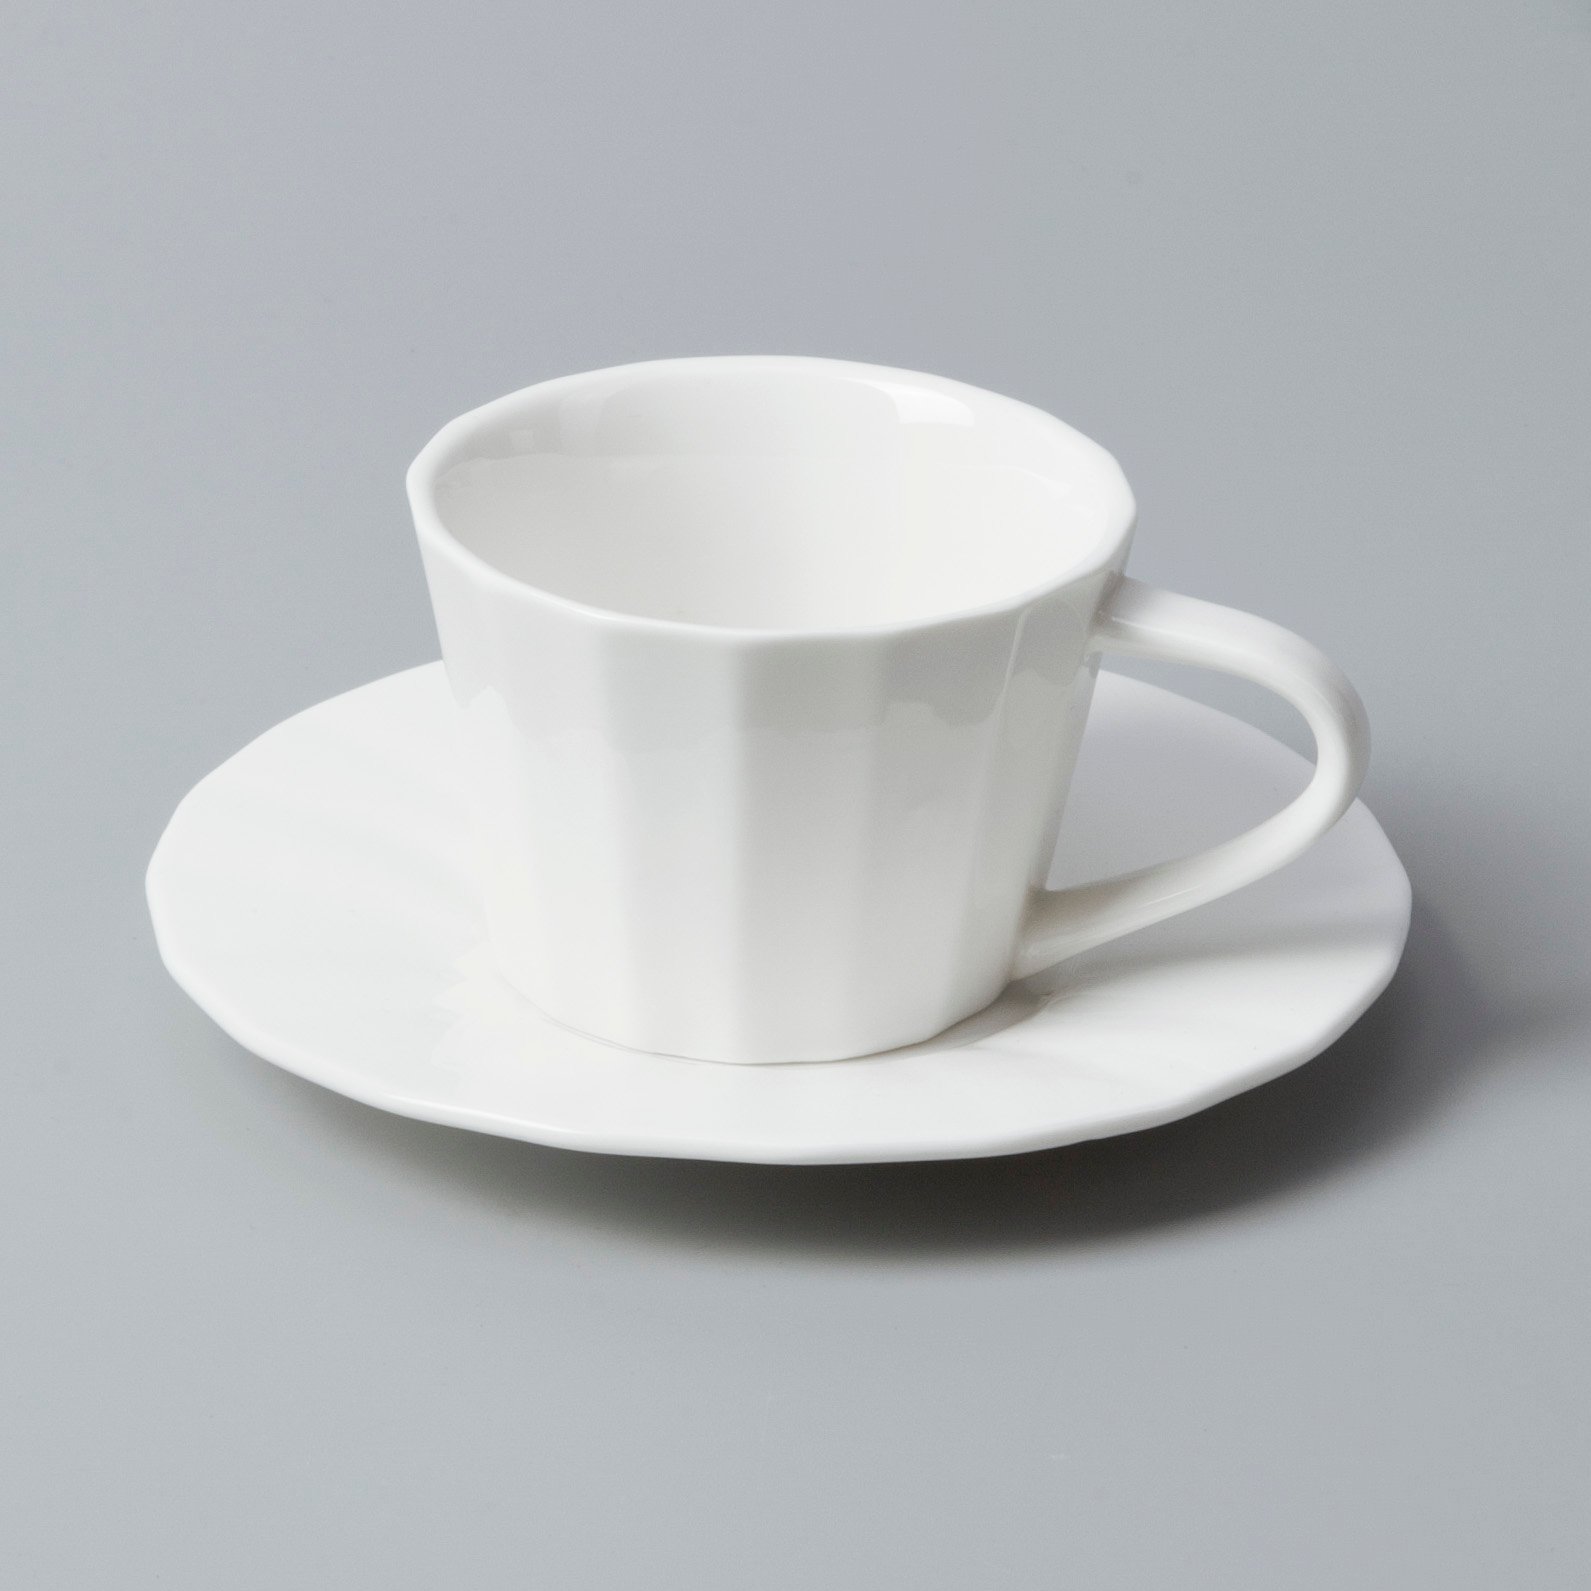 Two Eight fashion white porcelain platter Italian style for dinning room-10